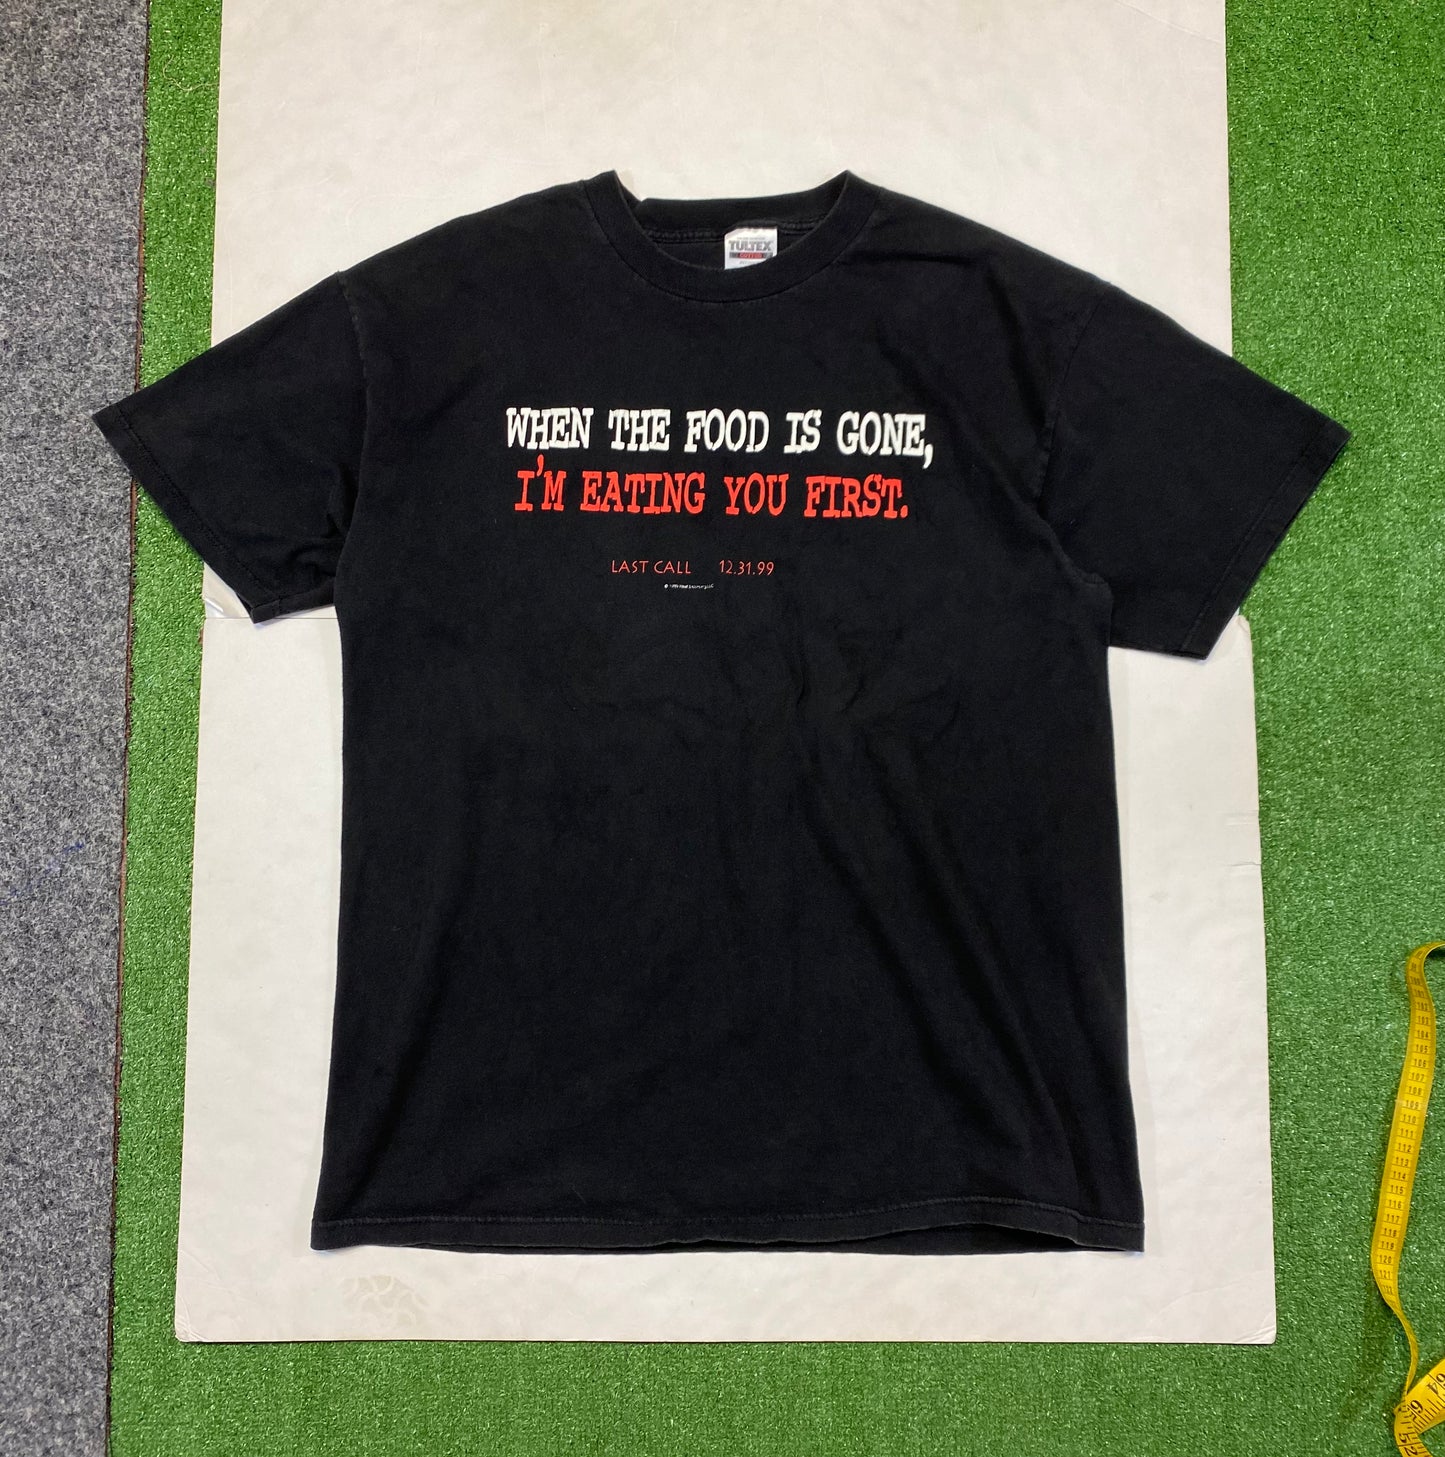 Vintage 1999 “Last Call” Millennium T-Shirt